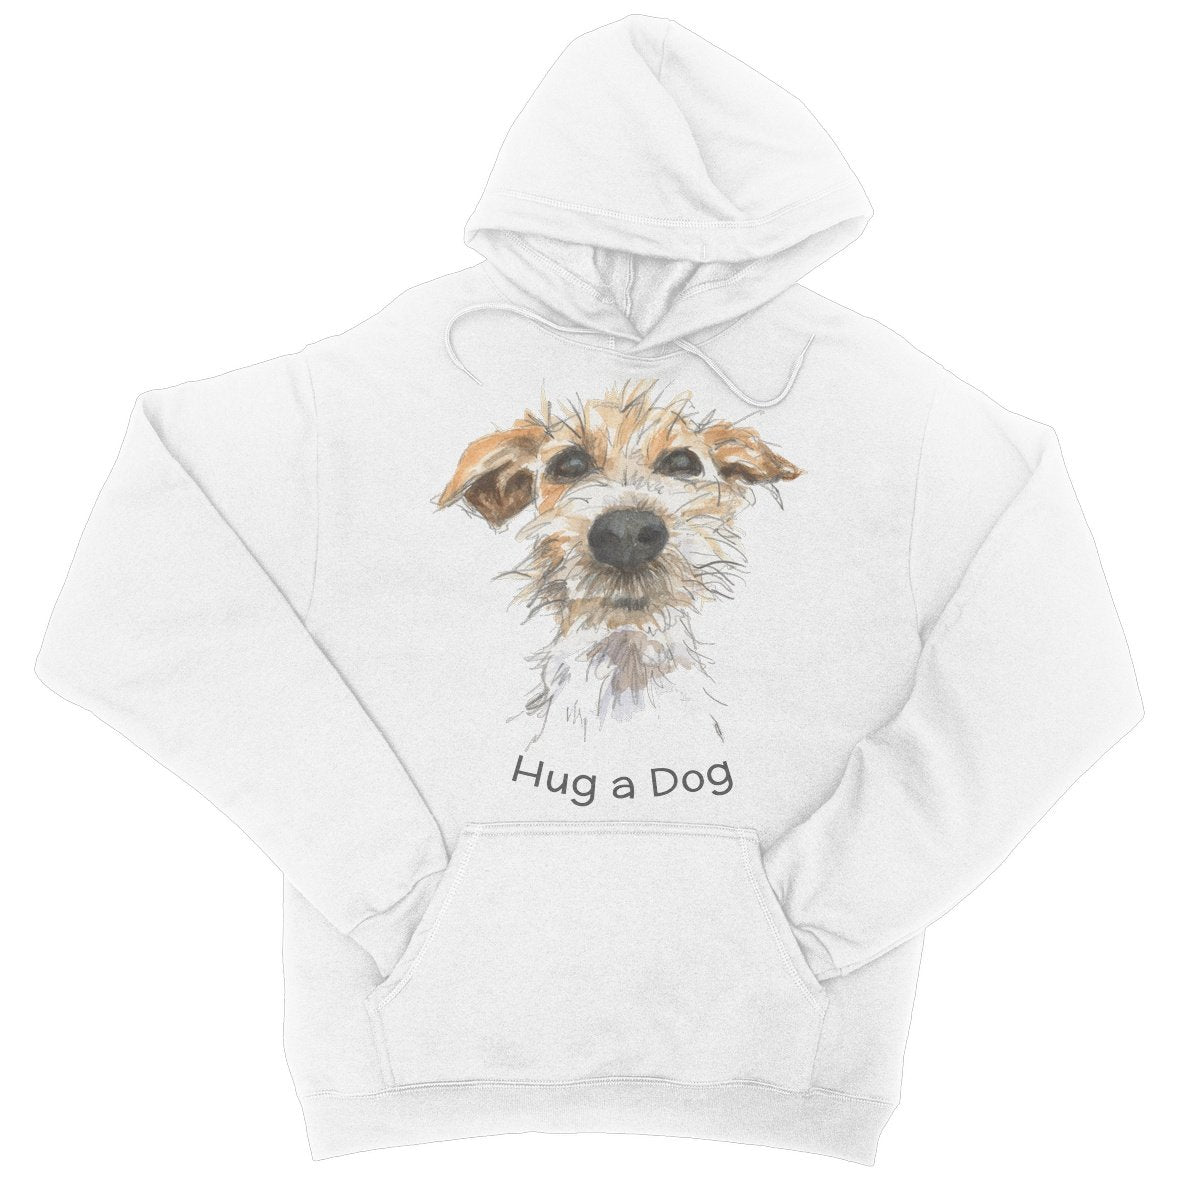 College Hoodie - 'Hug a Dog'